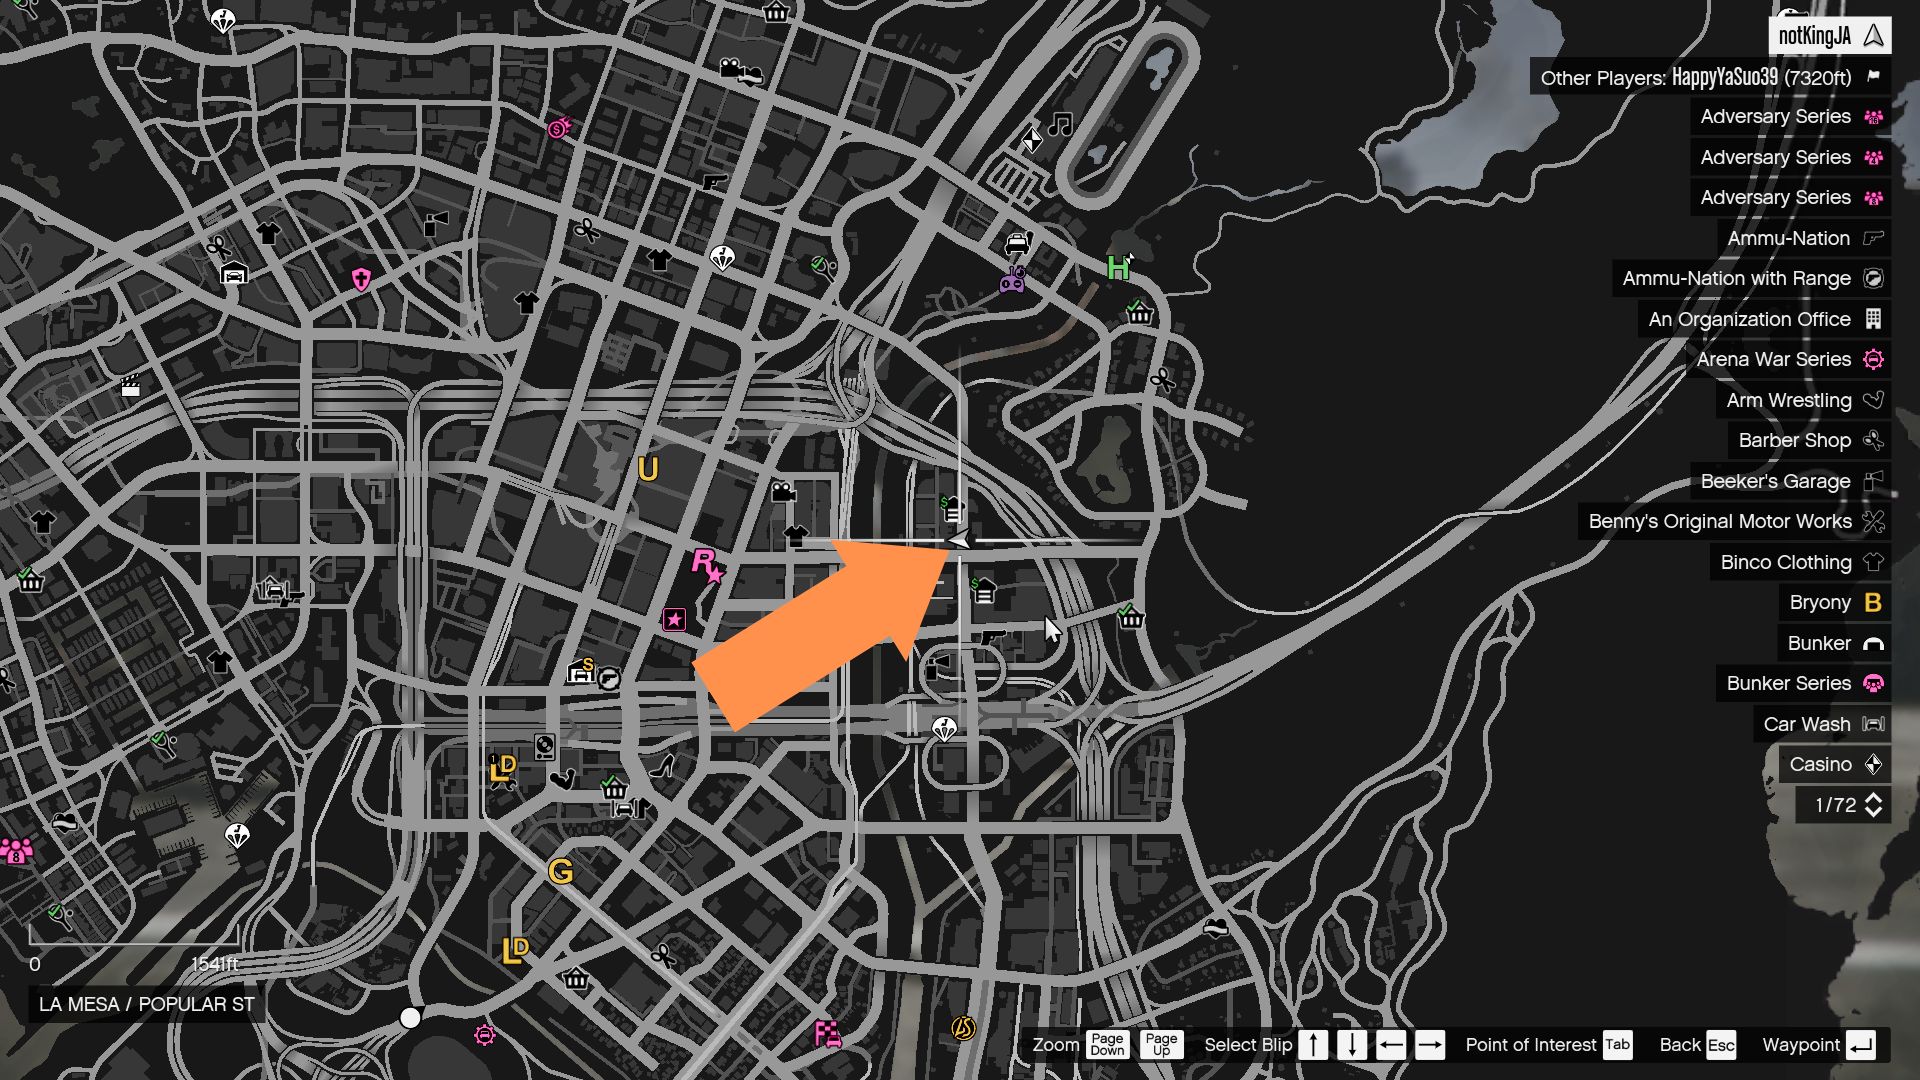 Videogeddon Arcade location in GTA 5